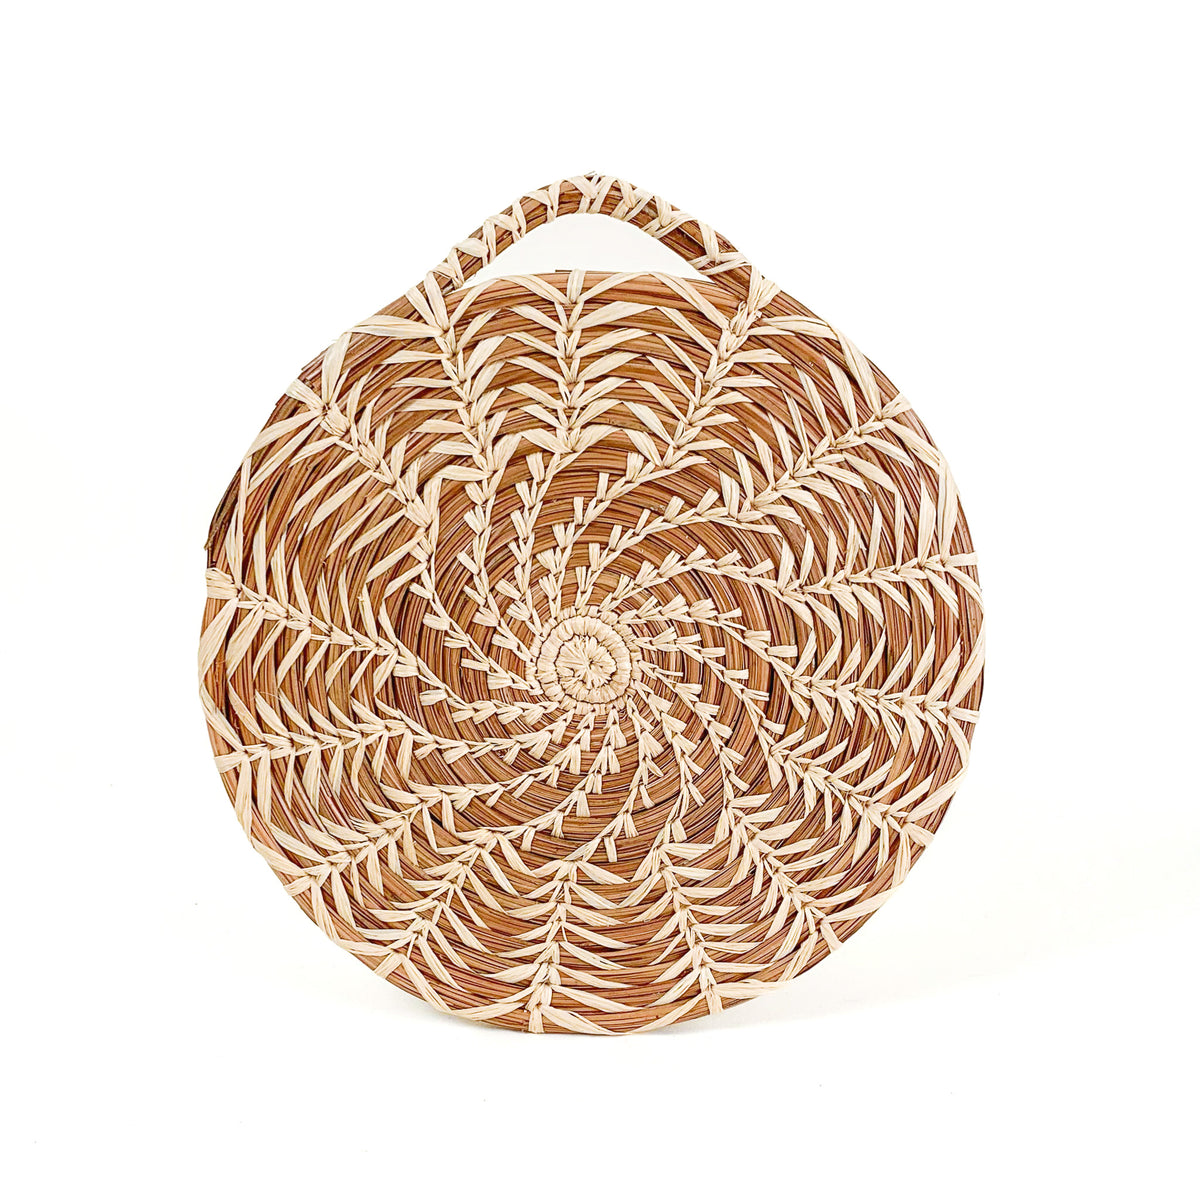 Pine needle trivet with alternate spiral design